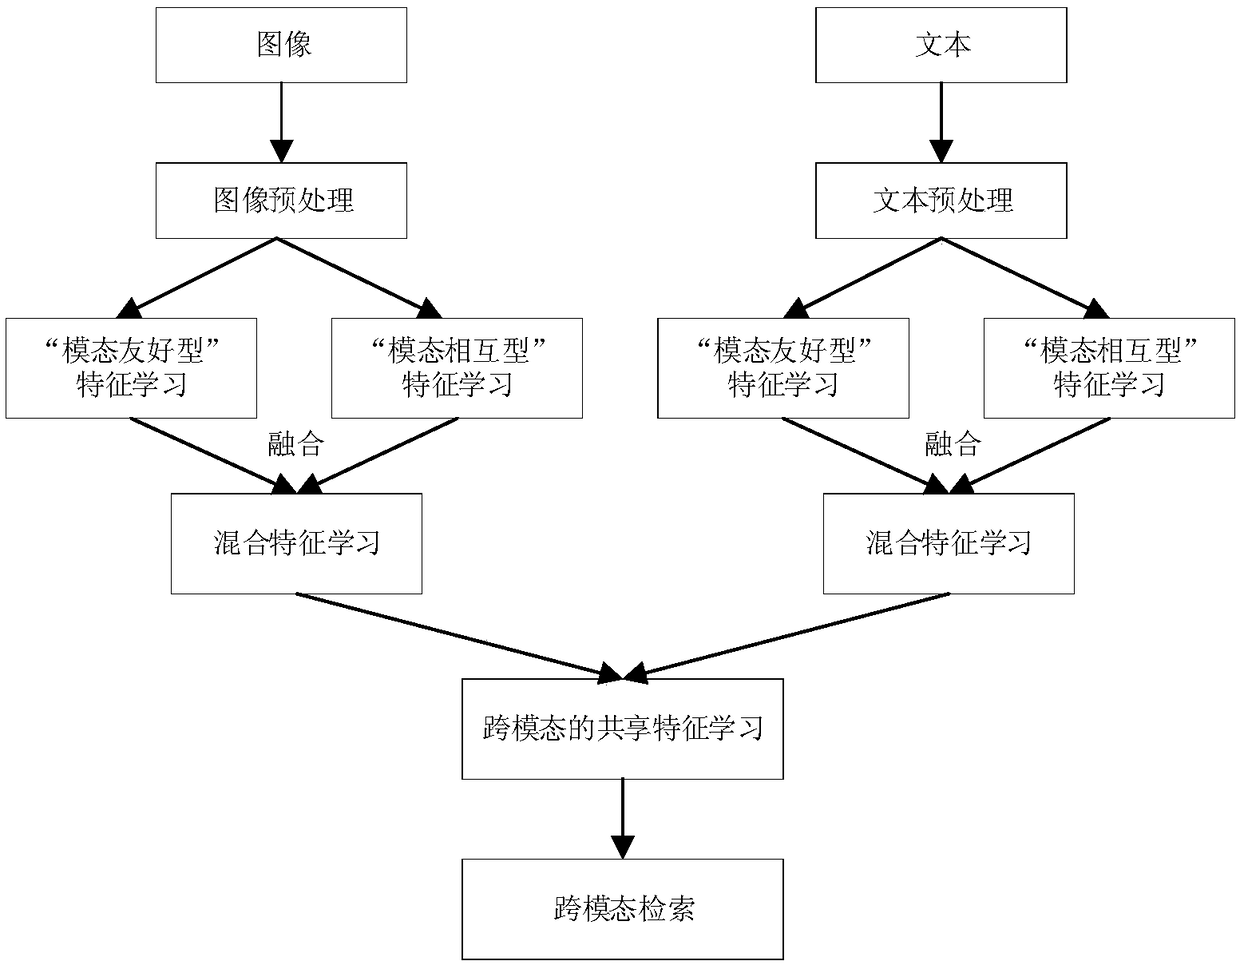 A method and system for cross-modal retrieval